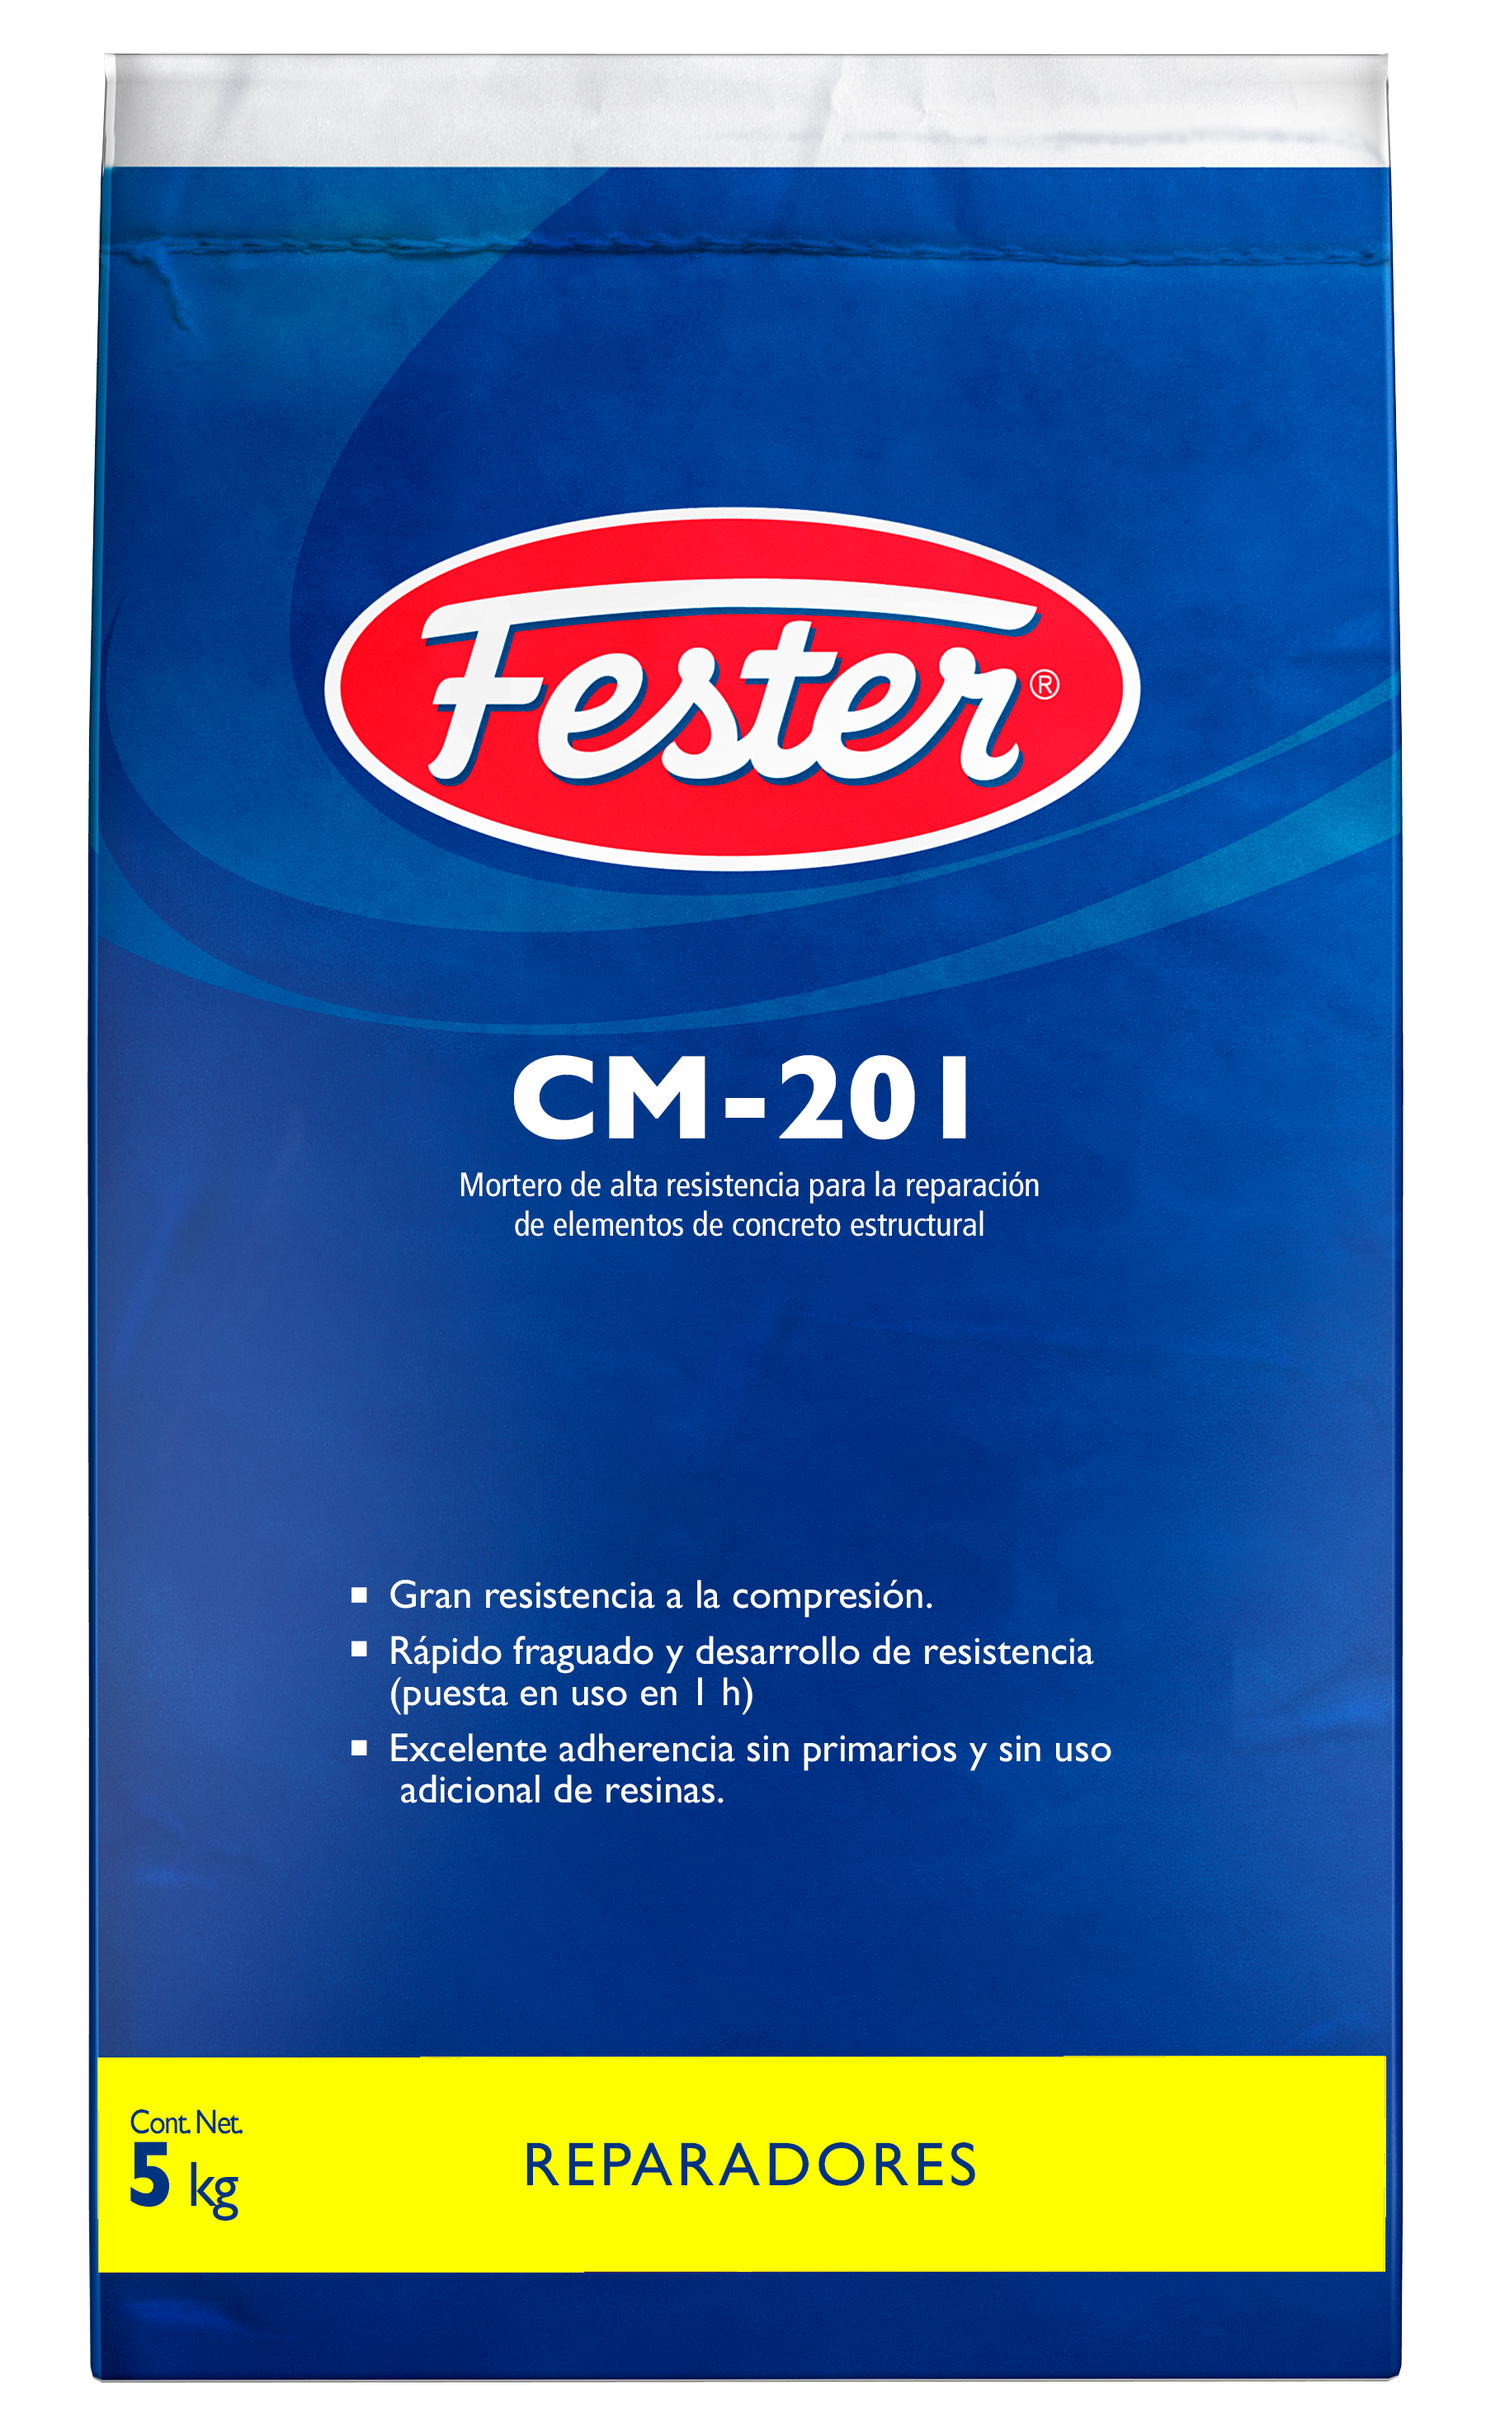 Envase de Fester CM201 mortero reparador. Aplicación de Fester CM201 en superficie de concreto. Superficie reparada con Fester CM201. Detalle del mortero reparador Fester CM201. Restauración de concreto con Fester CM201.